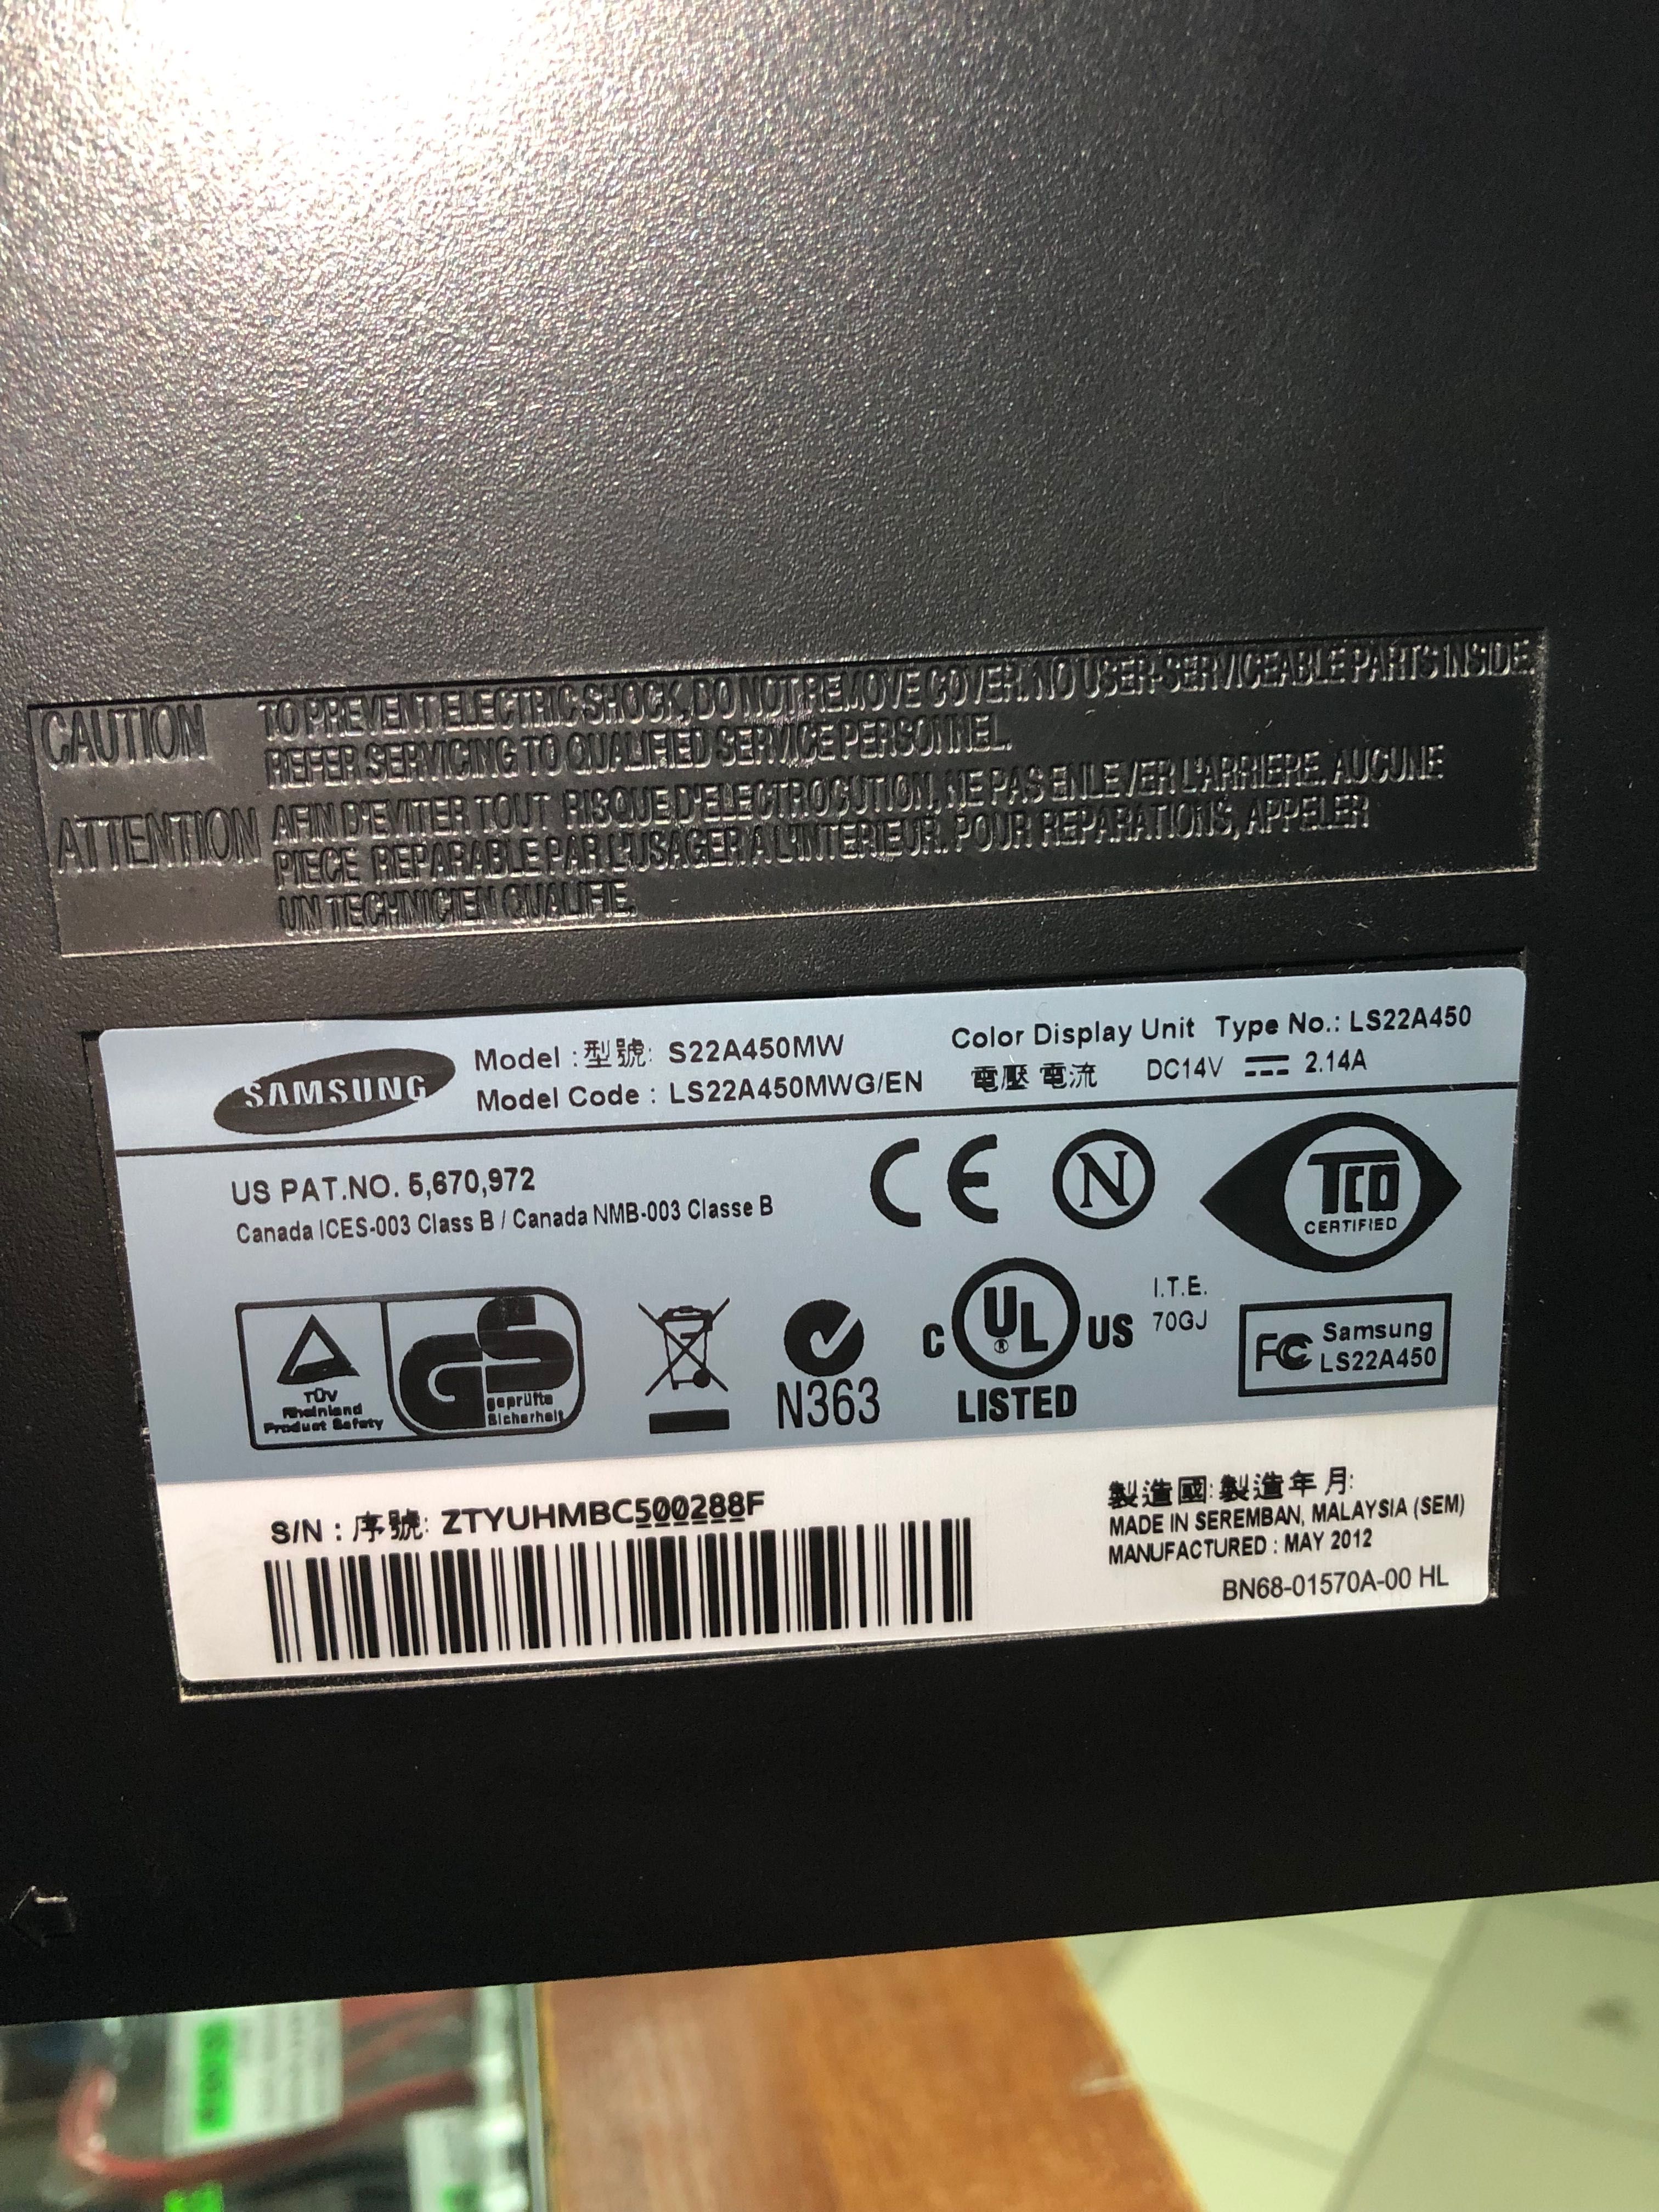 Samsung synkmasterSA450w